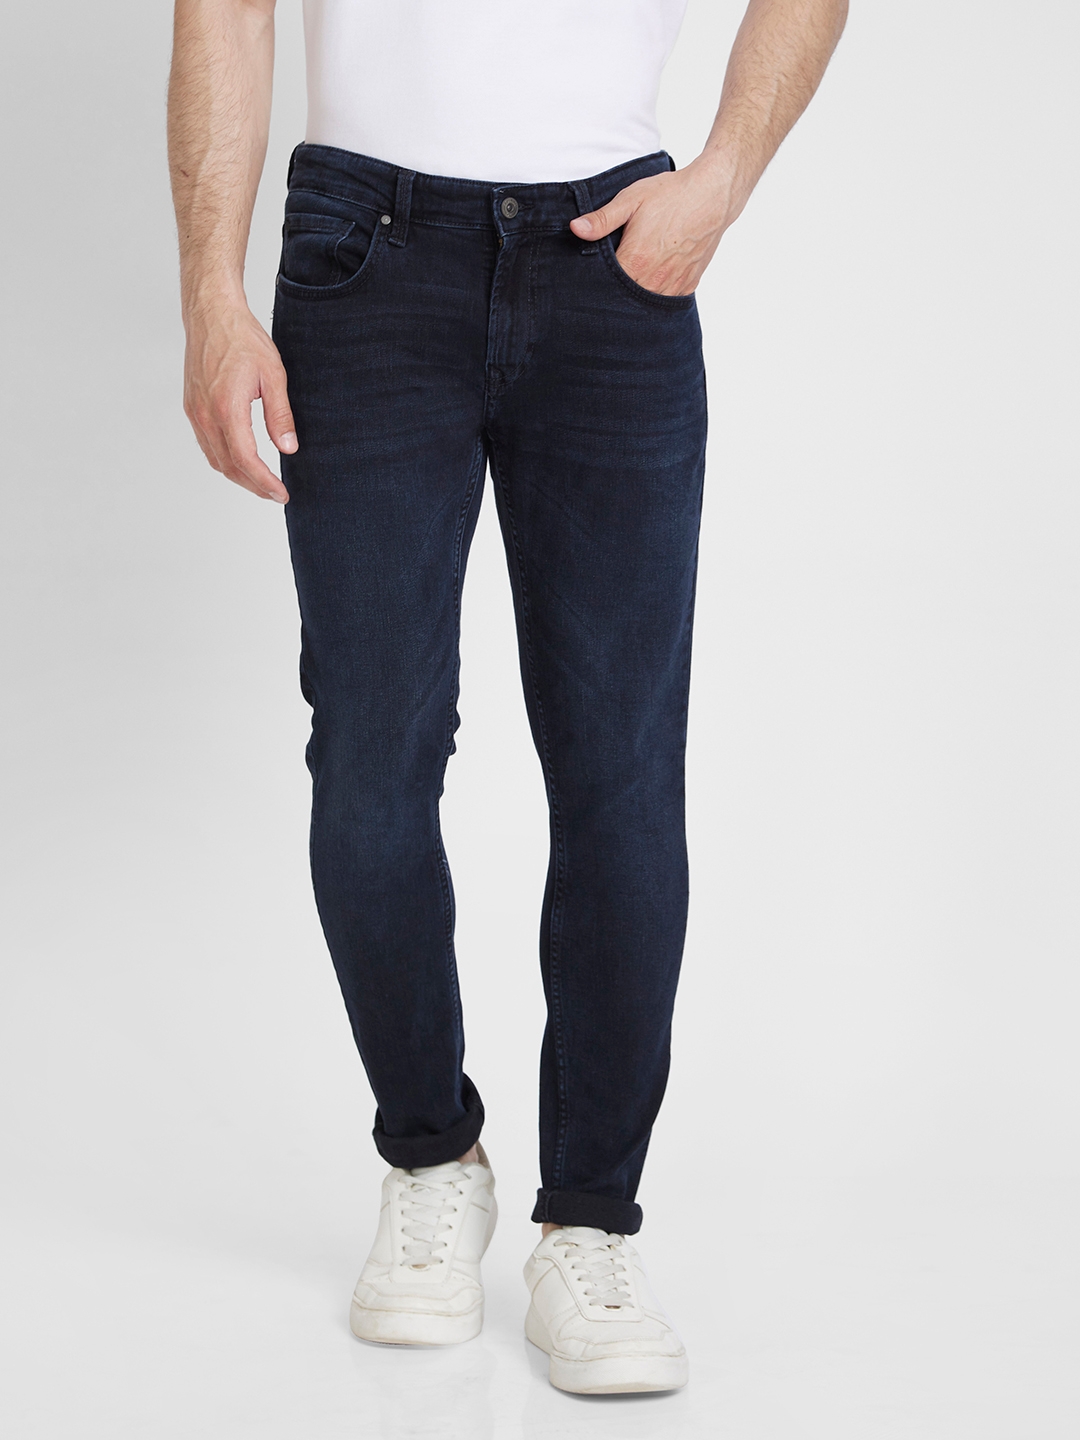 spykar | Spykar Men Charcoal Black Cotton Stretch Super Slim Fit Tapered Length Clean Look Low Rise Jeans - (Super Skinny) 0